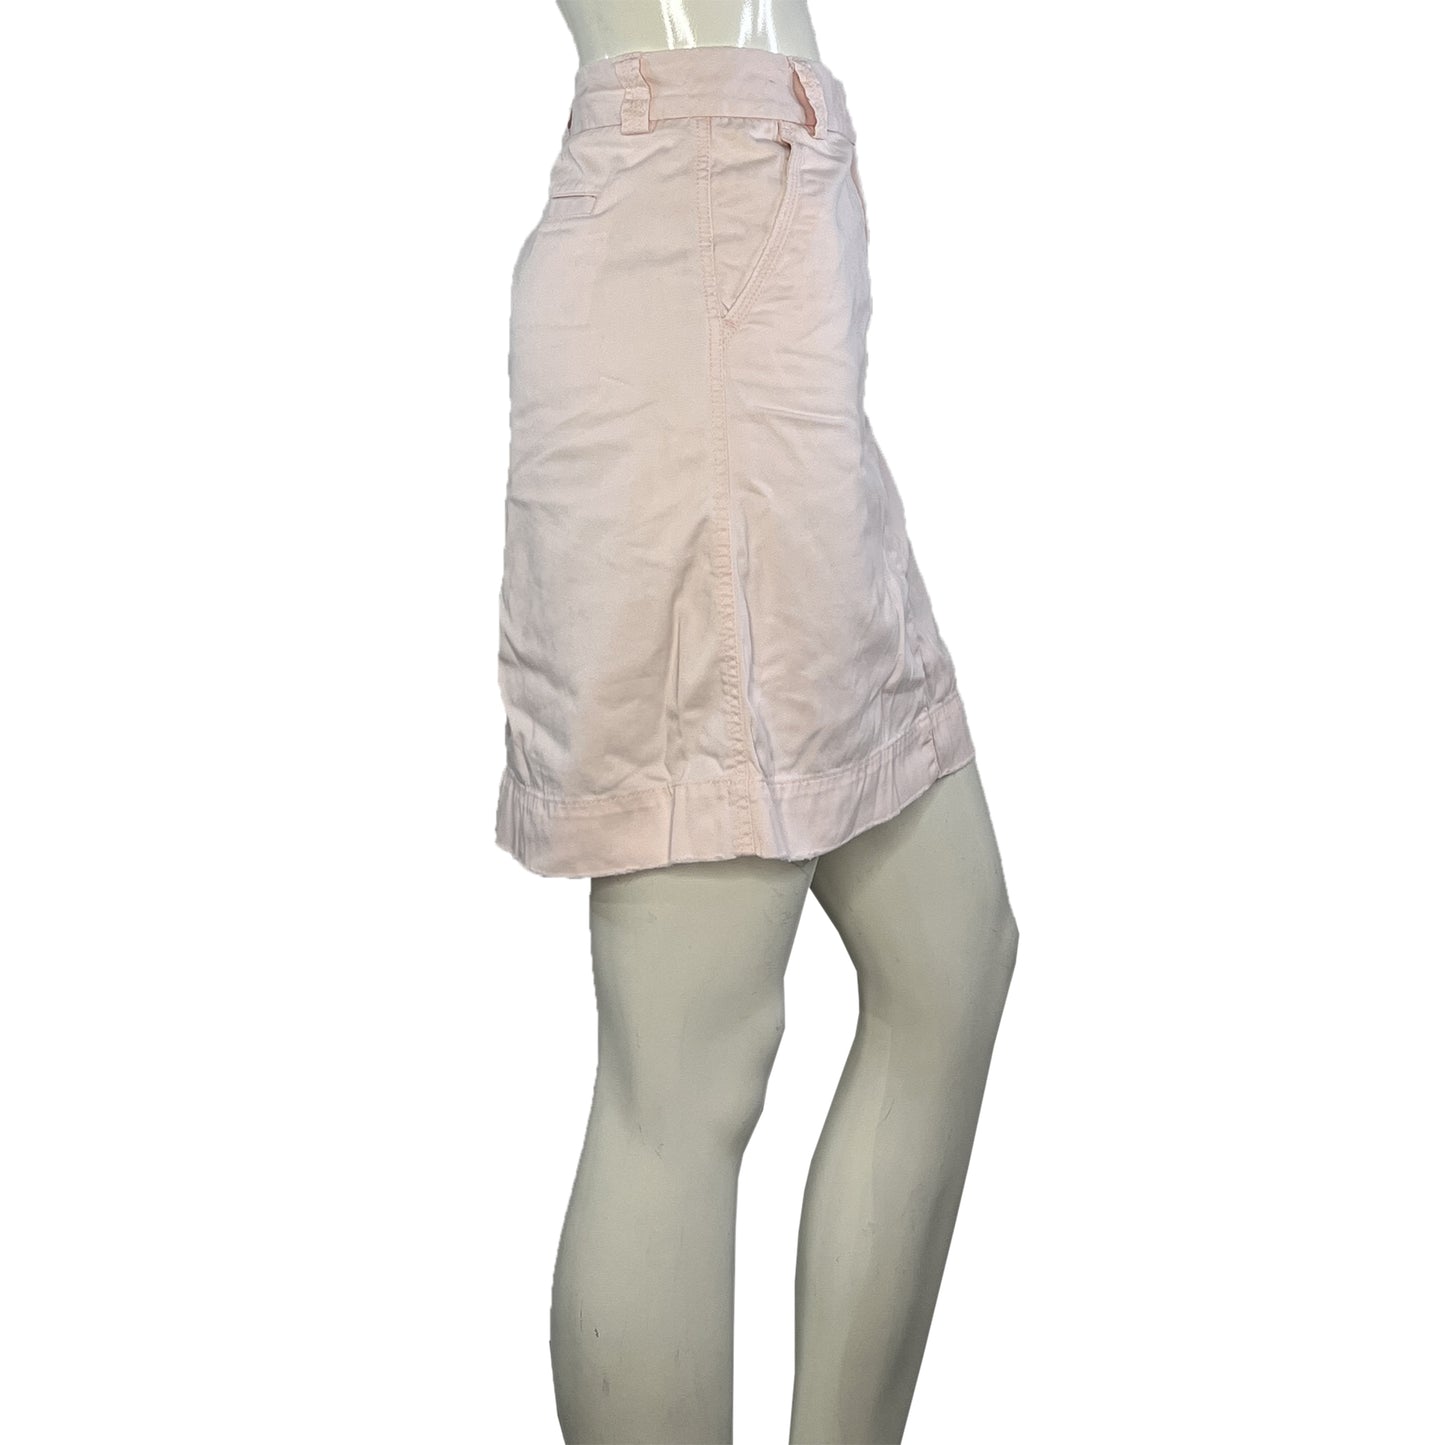 J Crew Pencil Skirt Above-Knee Light Pink Size 6 SKU 000417